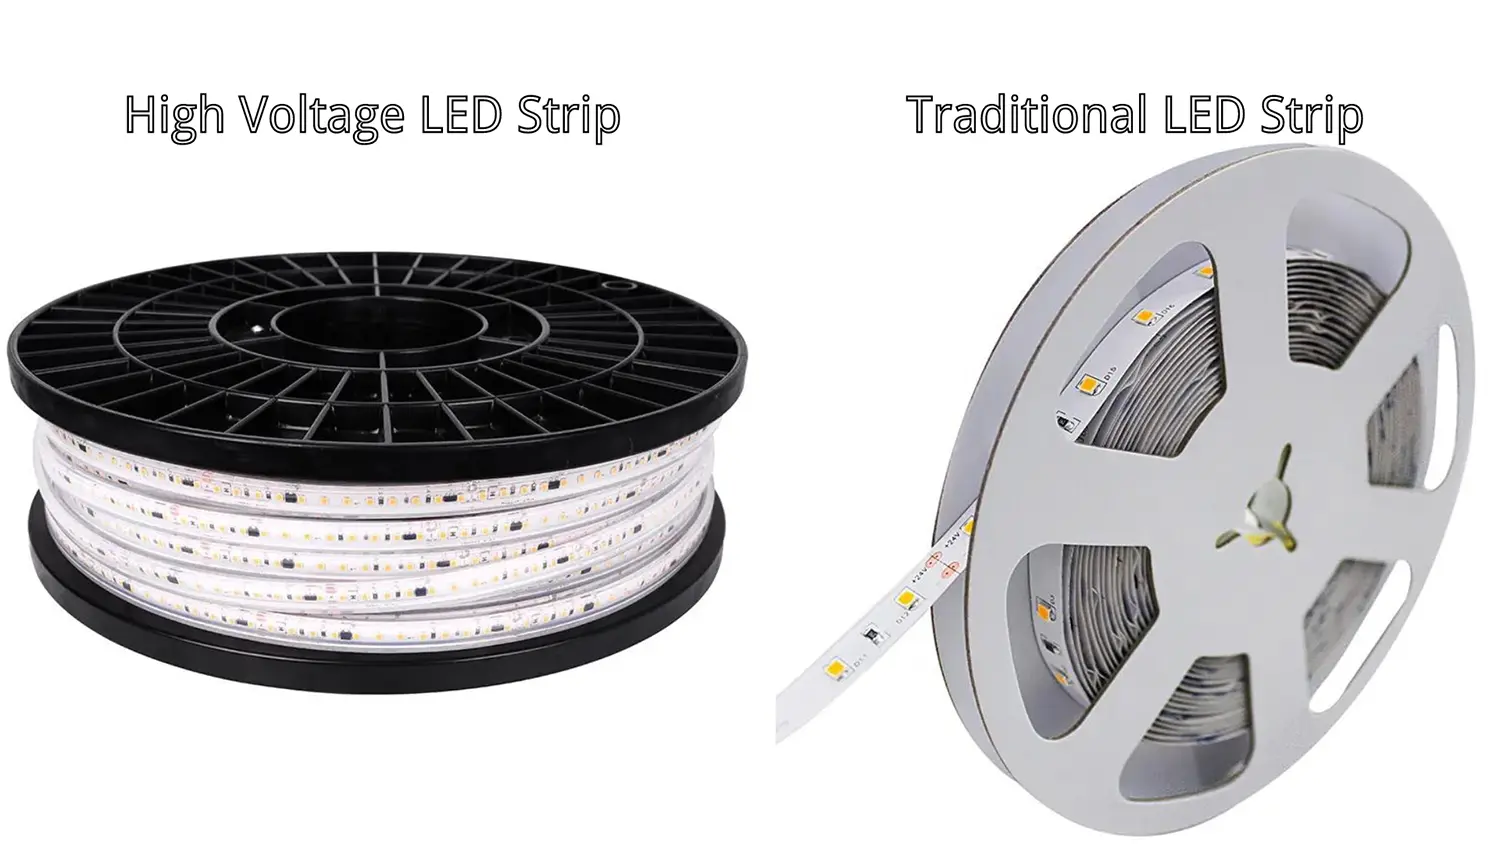 high voltage LED strip vs traditional LED strip